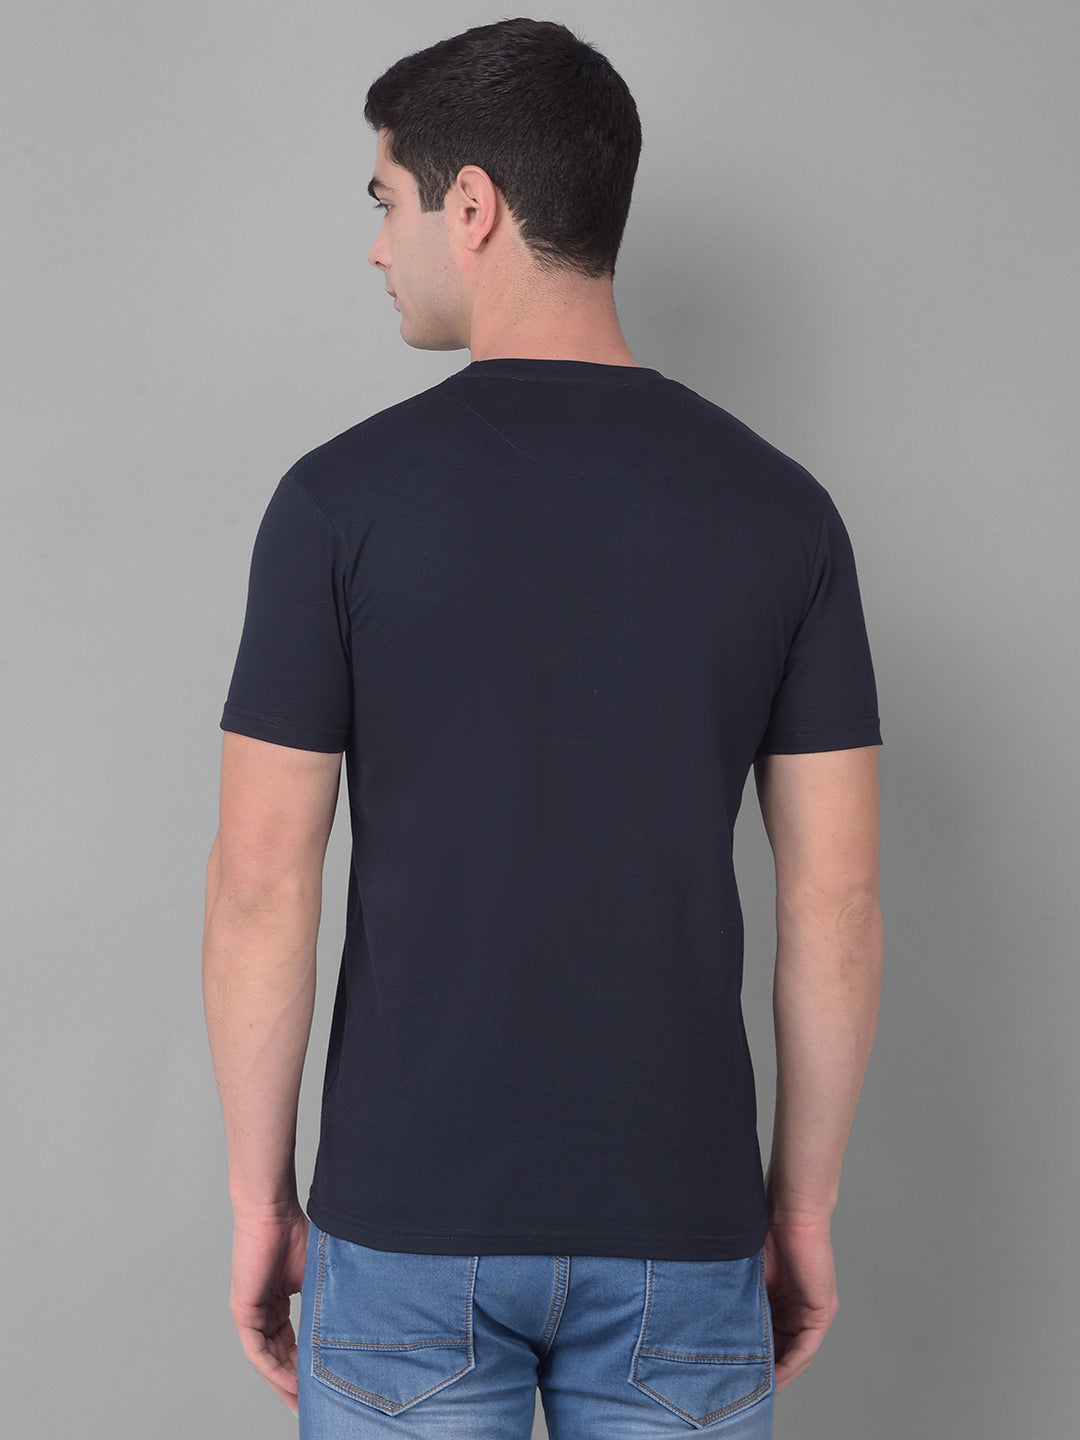 cobb navy blue printed round neck t-shirt